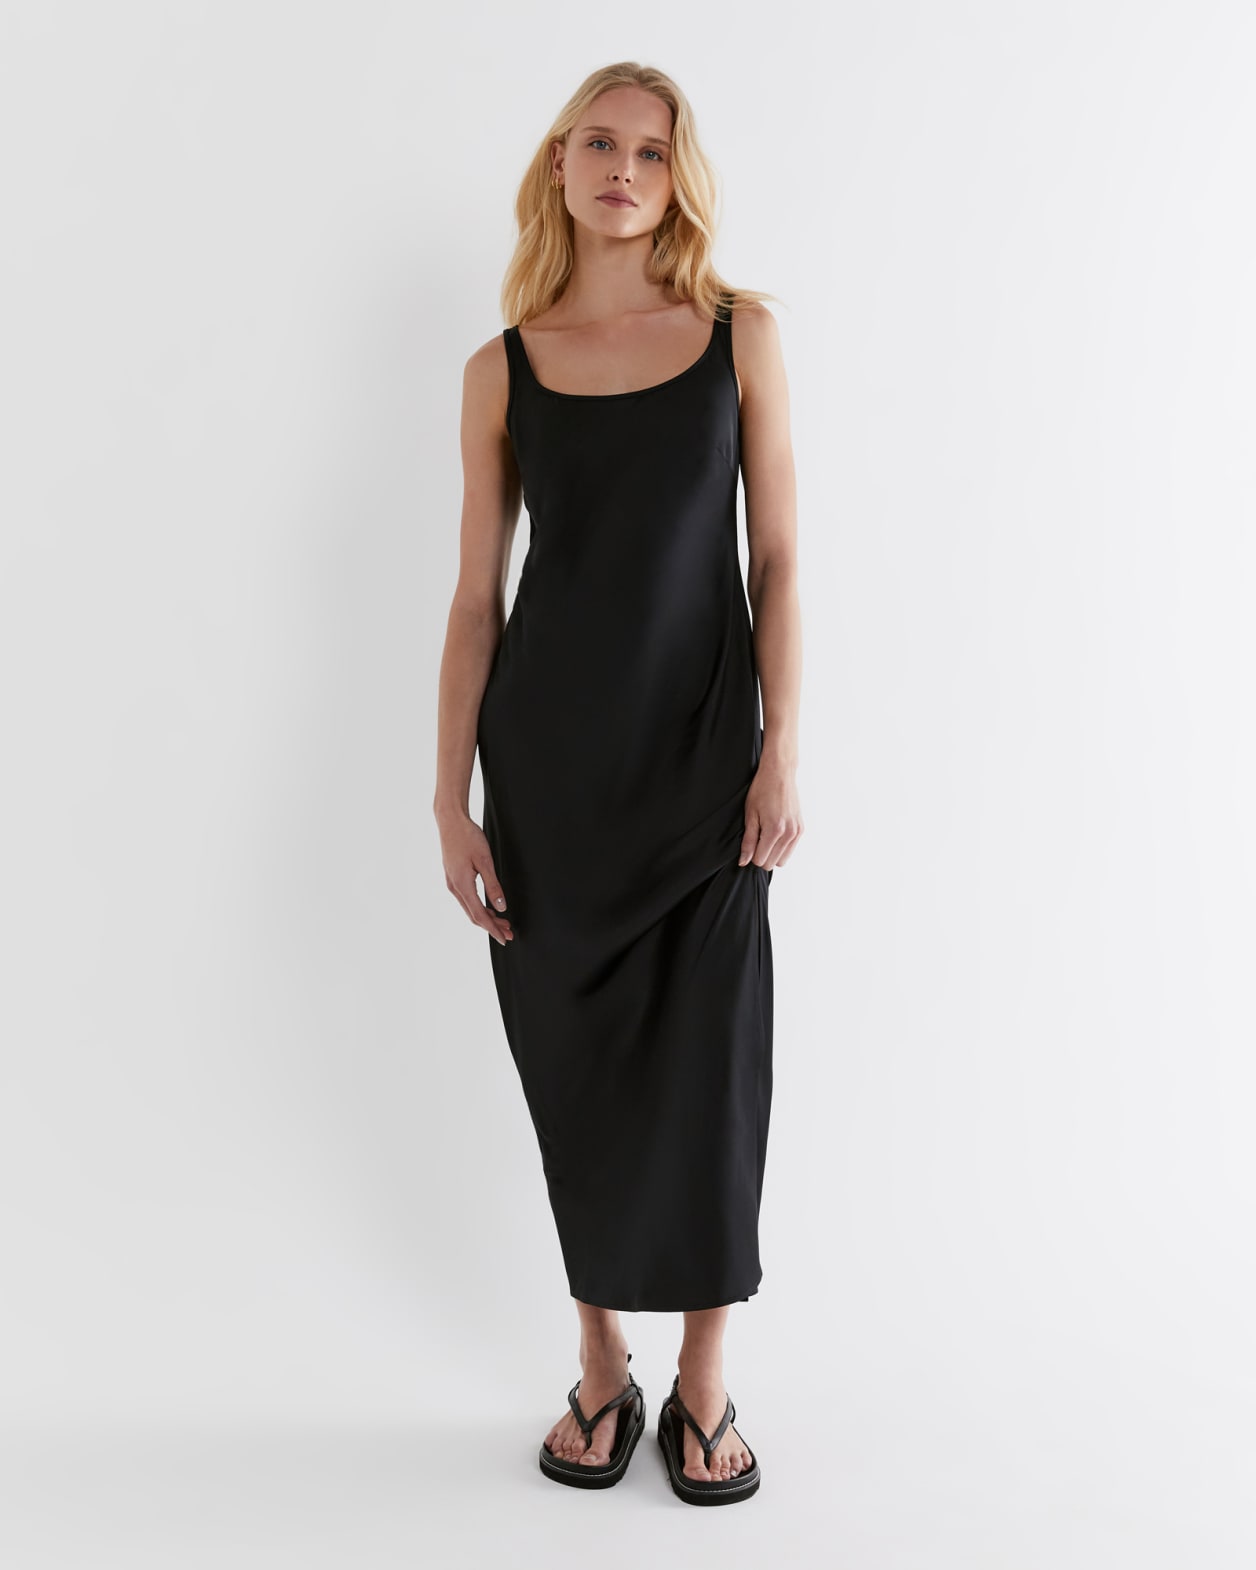 Maddi Shiny Slip Dress in BLACK